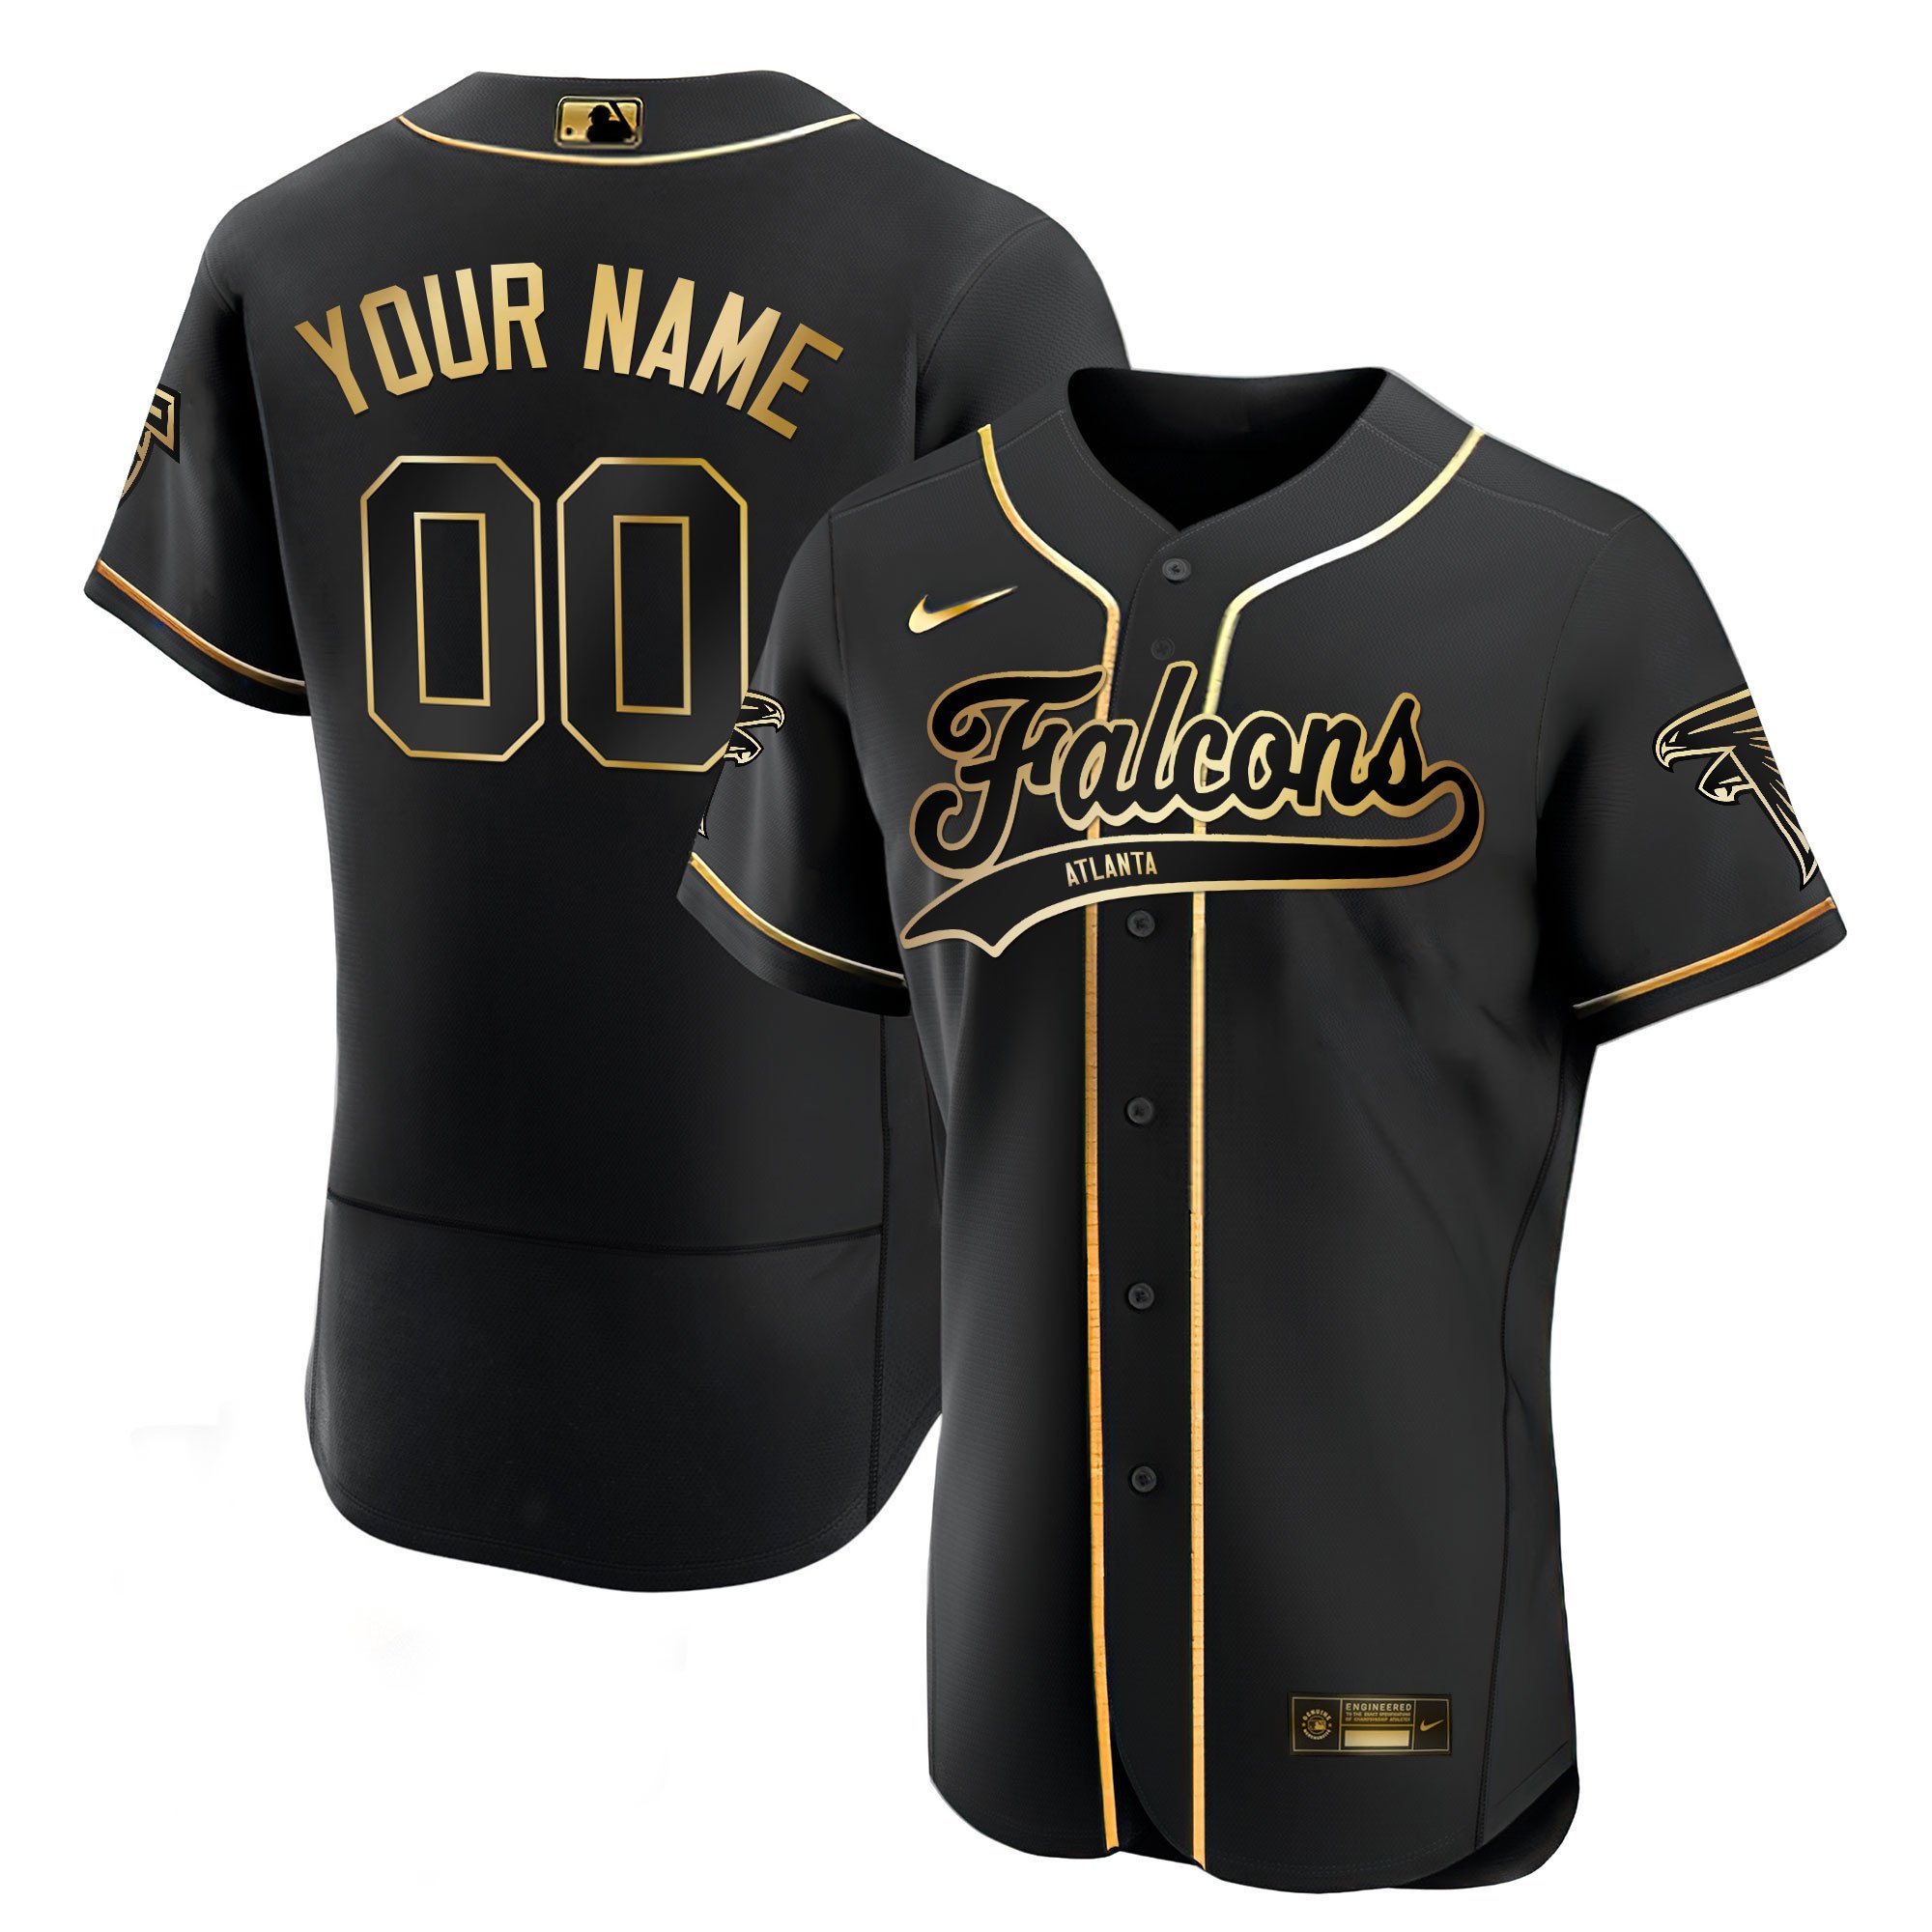 Atlanta Falcons Black Gold & White Gold Baseball Custom Jersey